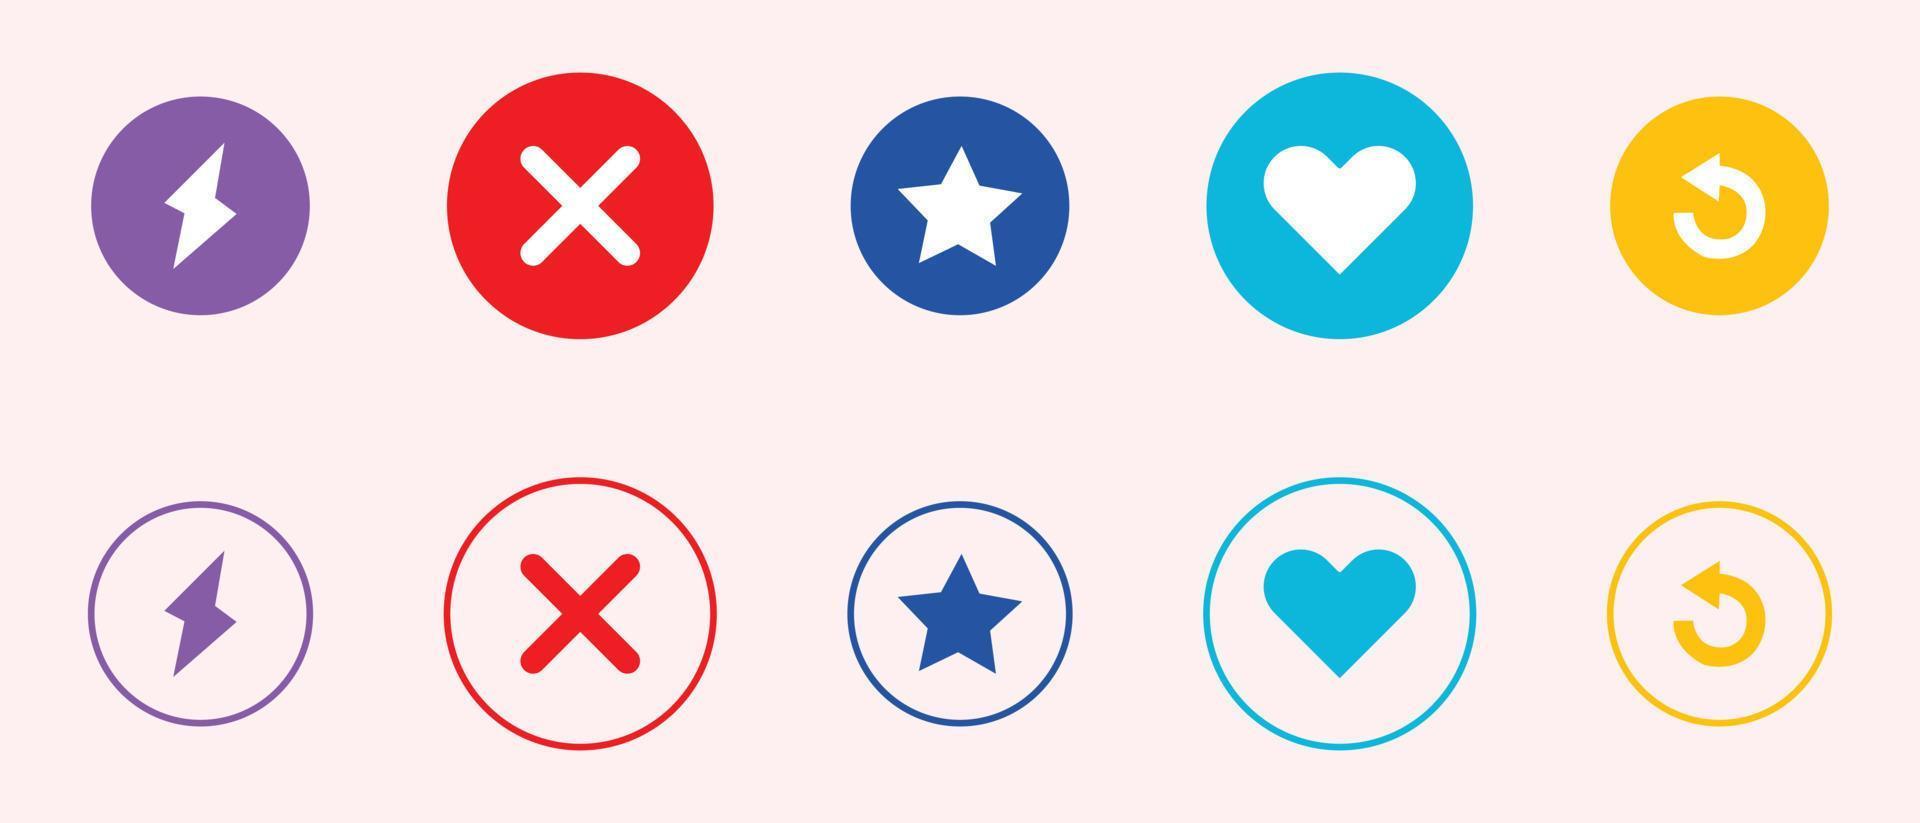 Social-Media-Dating-Symbole. design für web und mobile app vektor